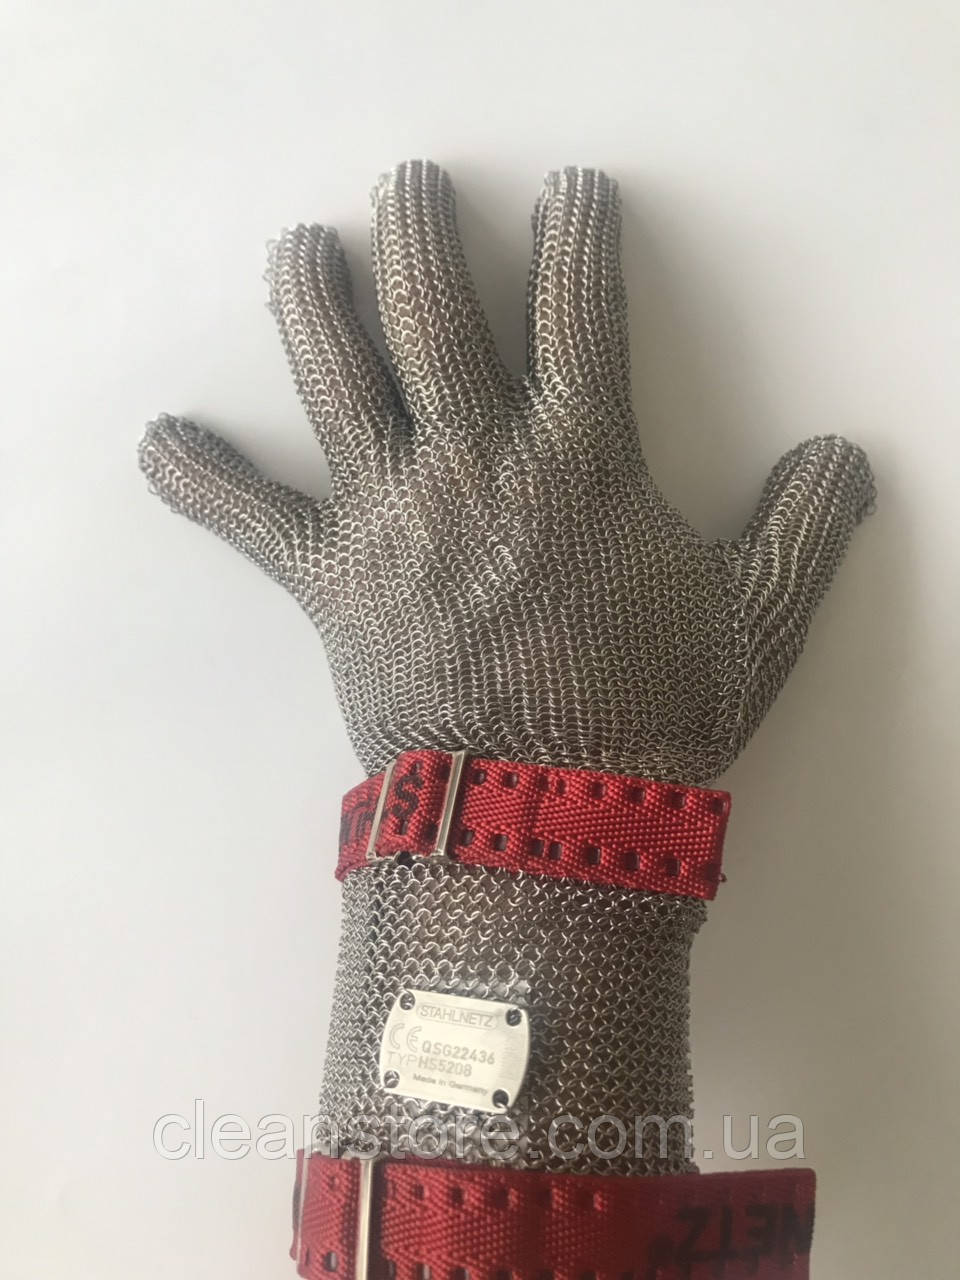 Кольчужна рукавичка з тканинним ремінцем і закотом 8 см Schlachthausfreund (Німеччина)